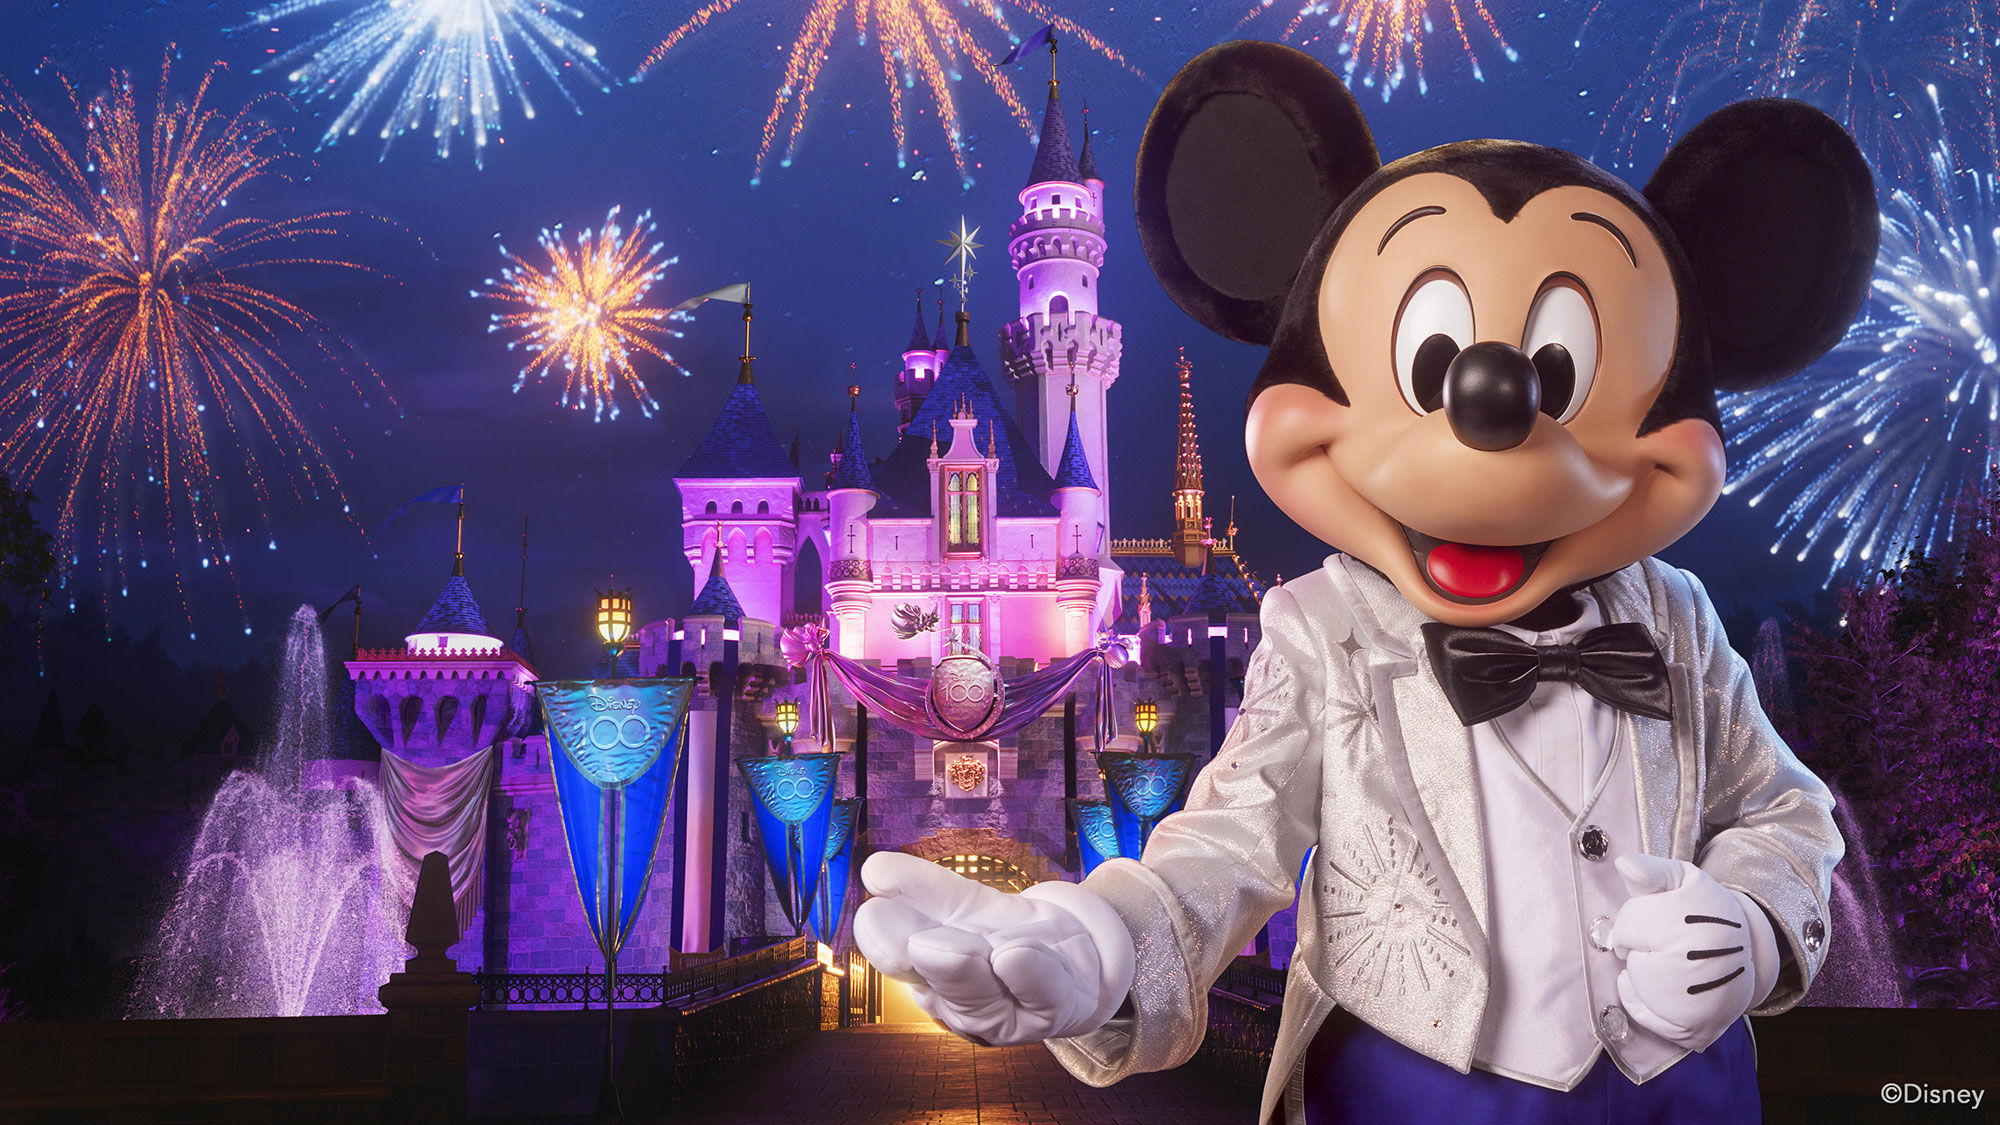 The Disney100 celebration will kick off at the Disneyland Resort on Jan. 27.